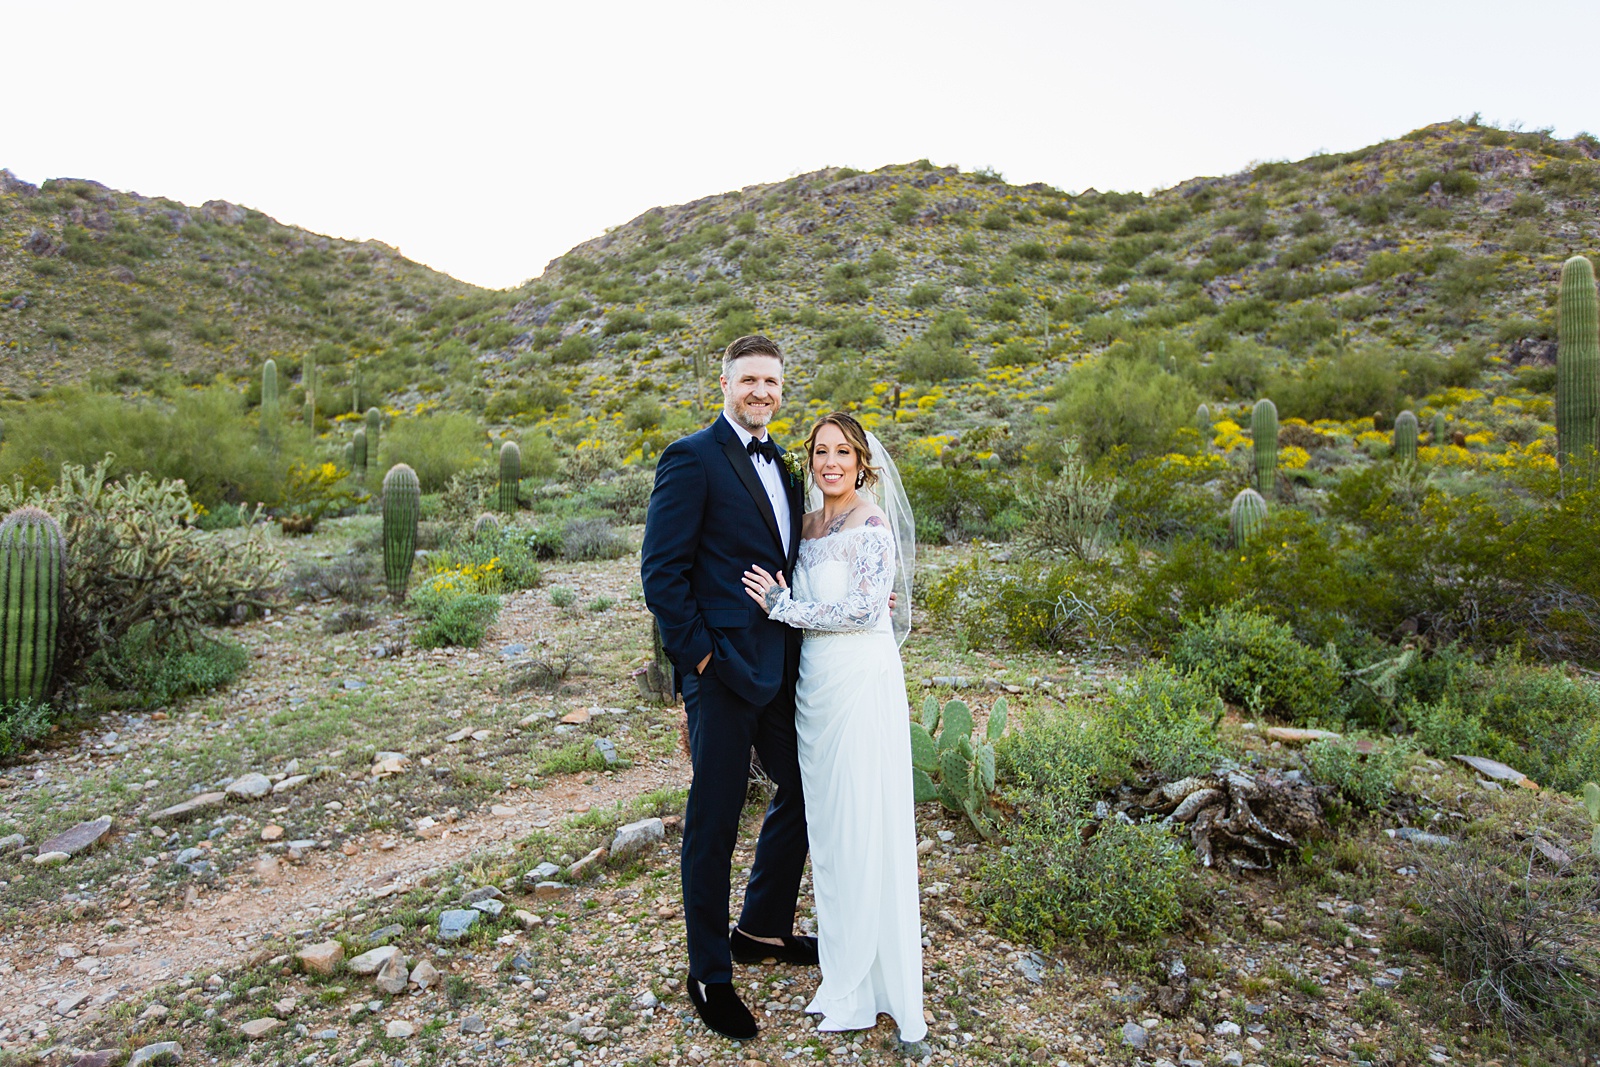 Bride and groom pose during their backyard wedding by Arizona wedding photographer PMA Photography.